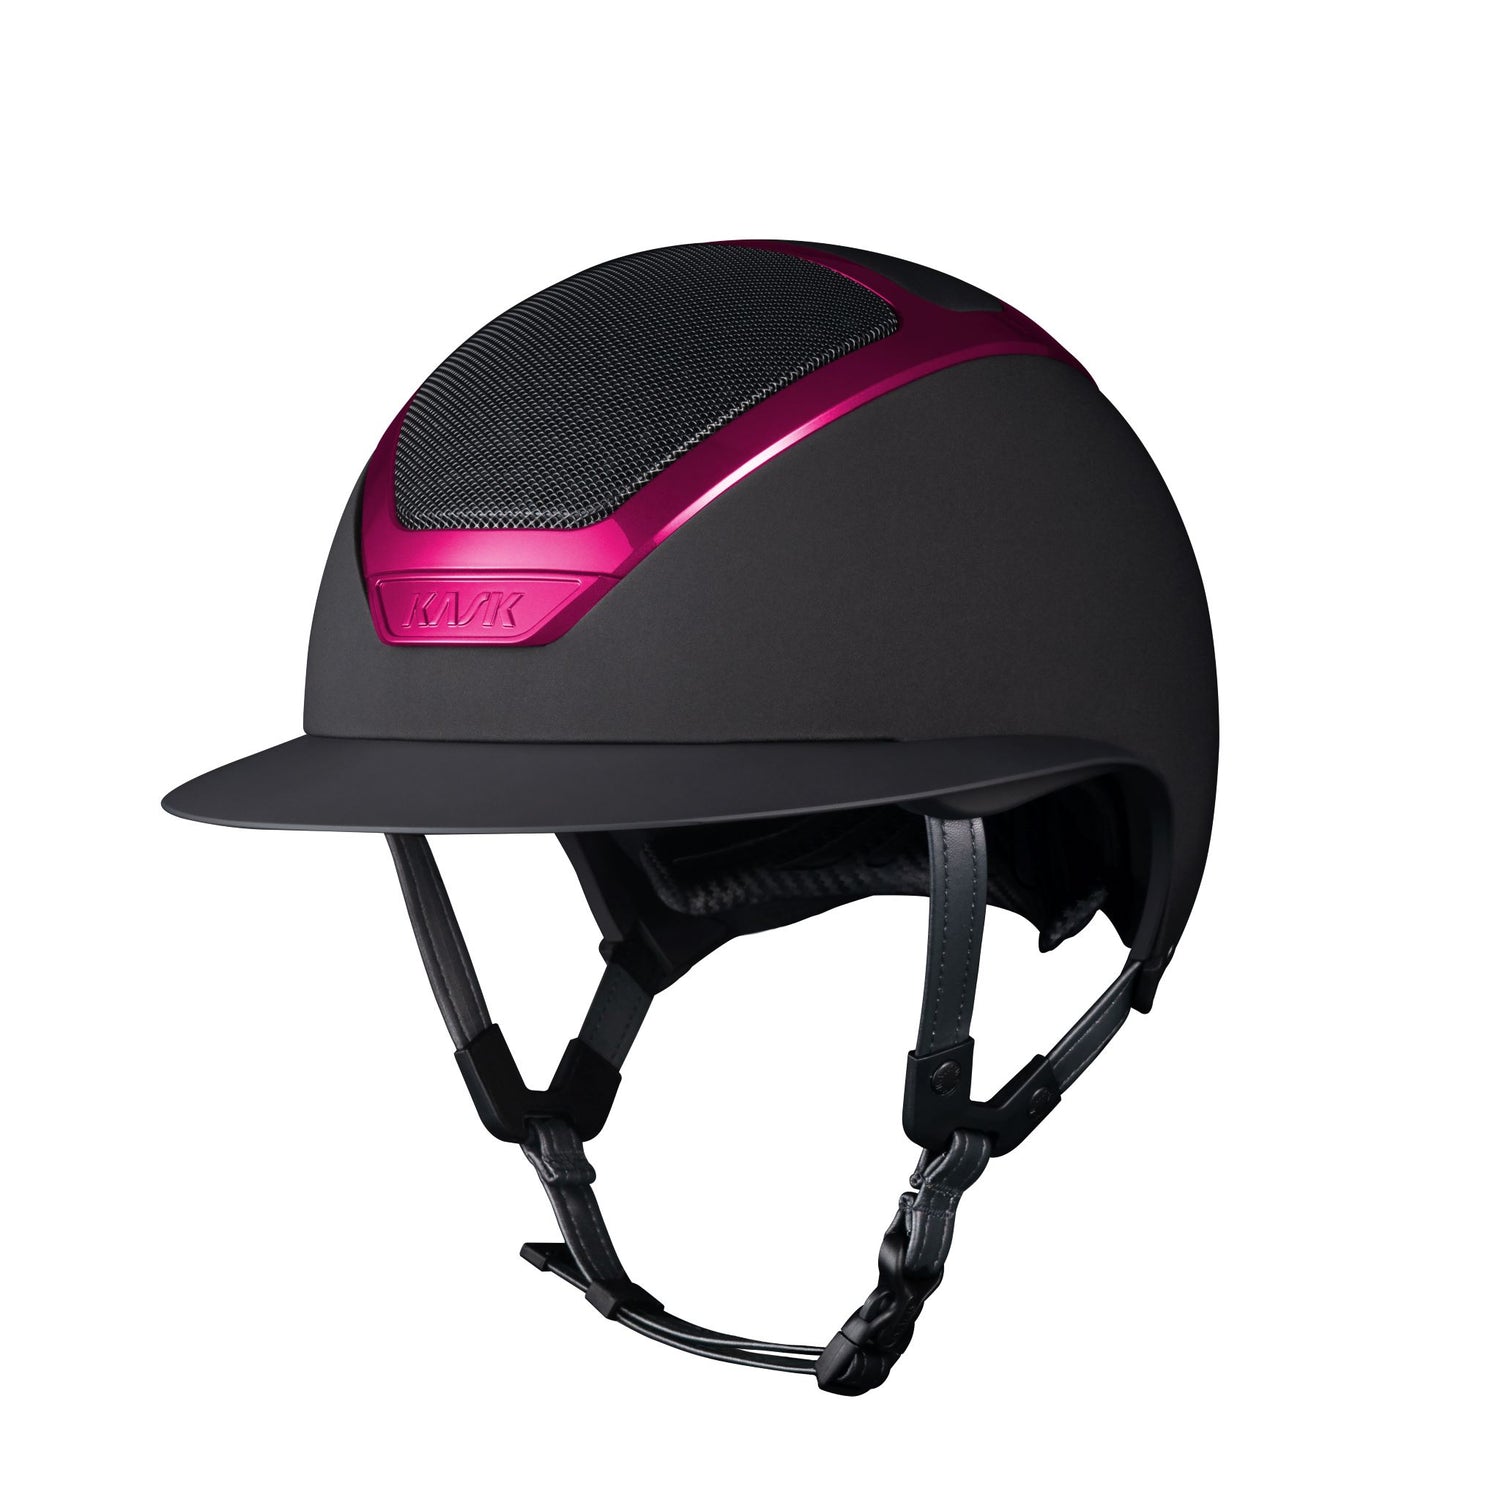 Kask helmet with pink